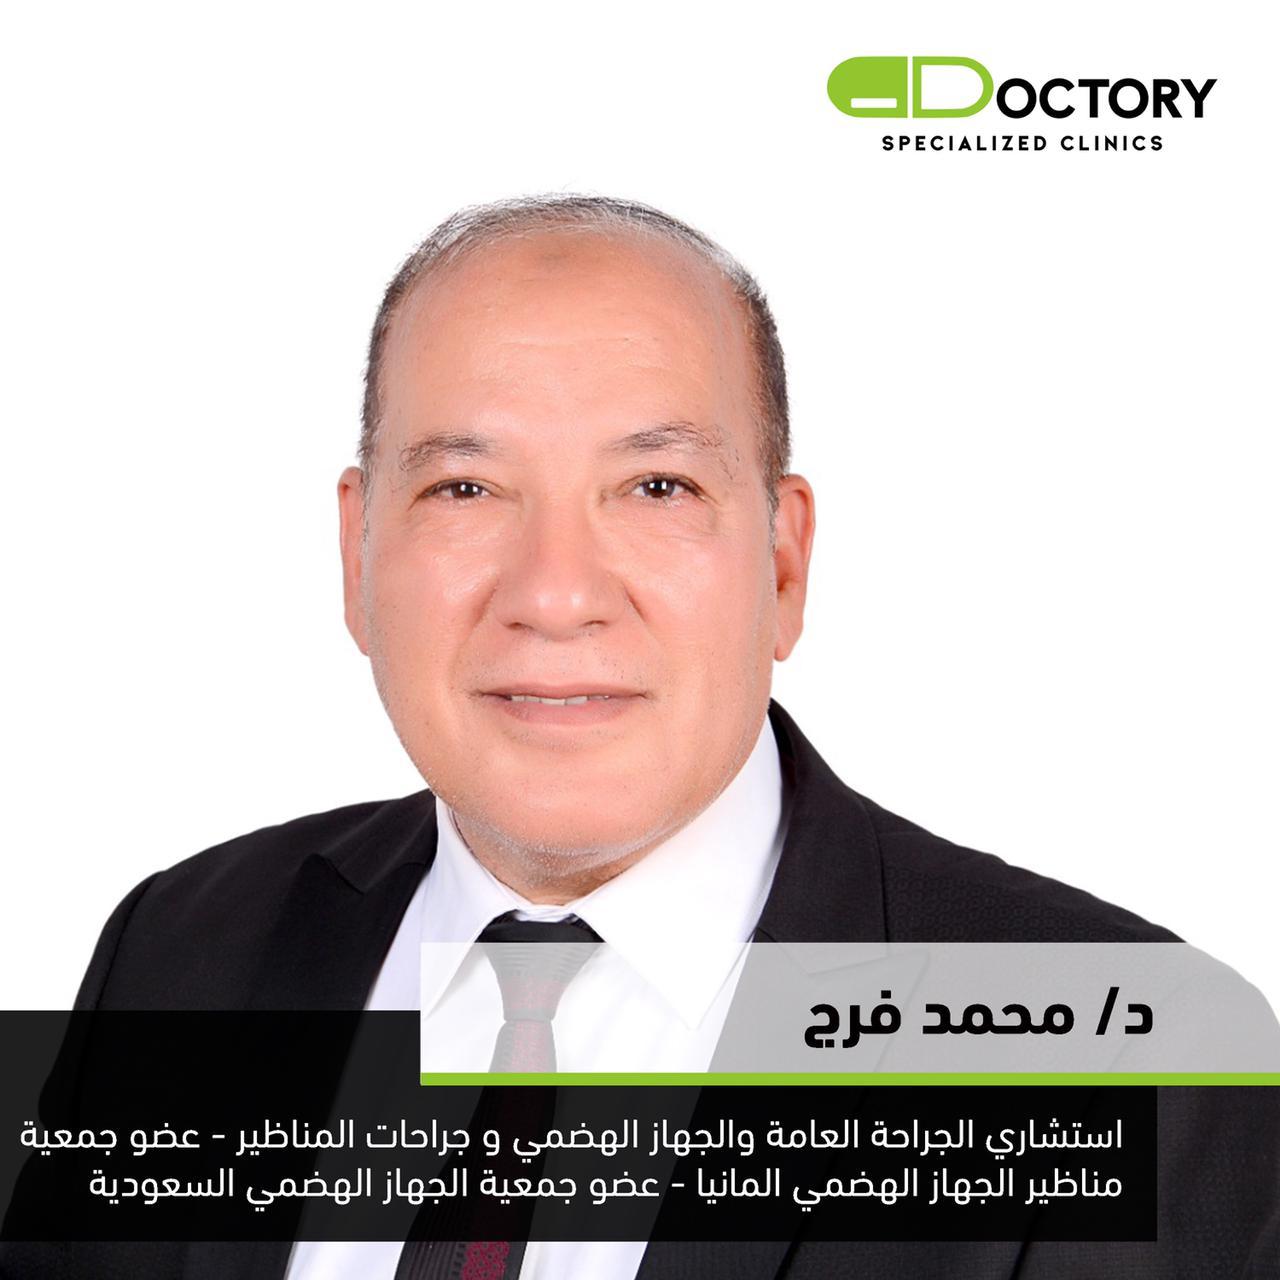 دكتور محمد فرج